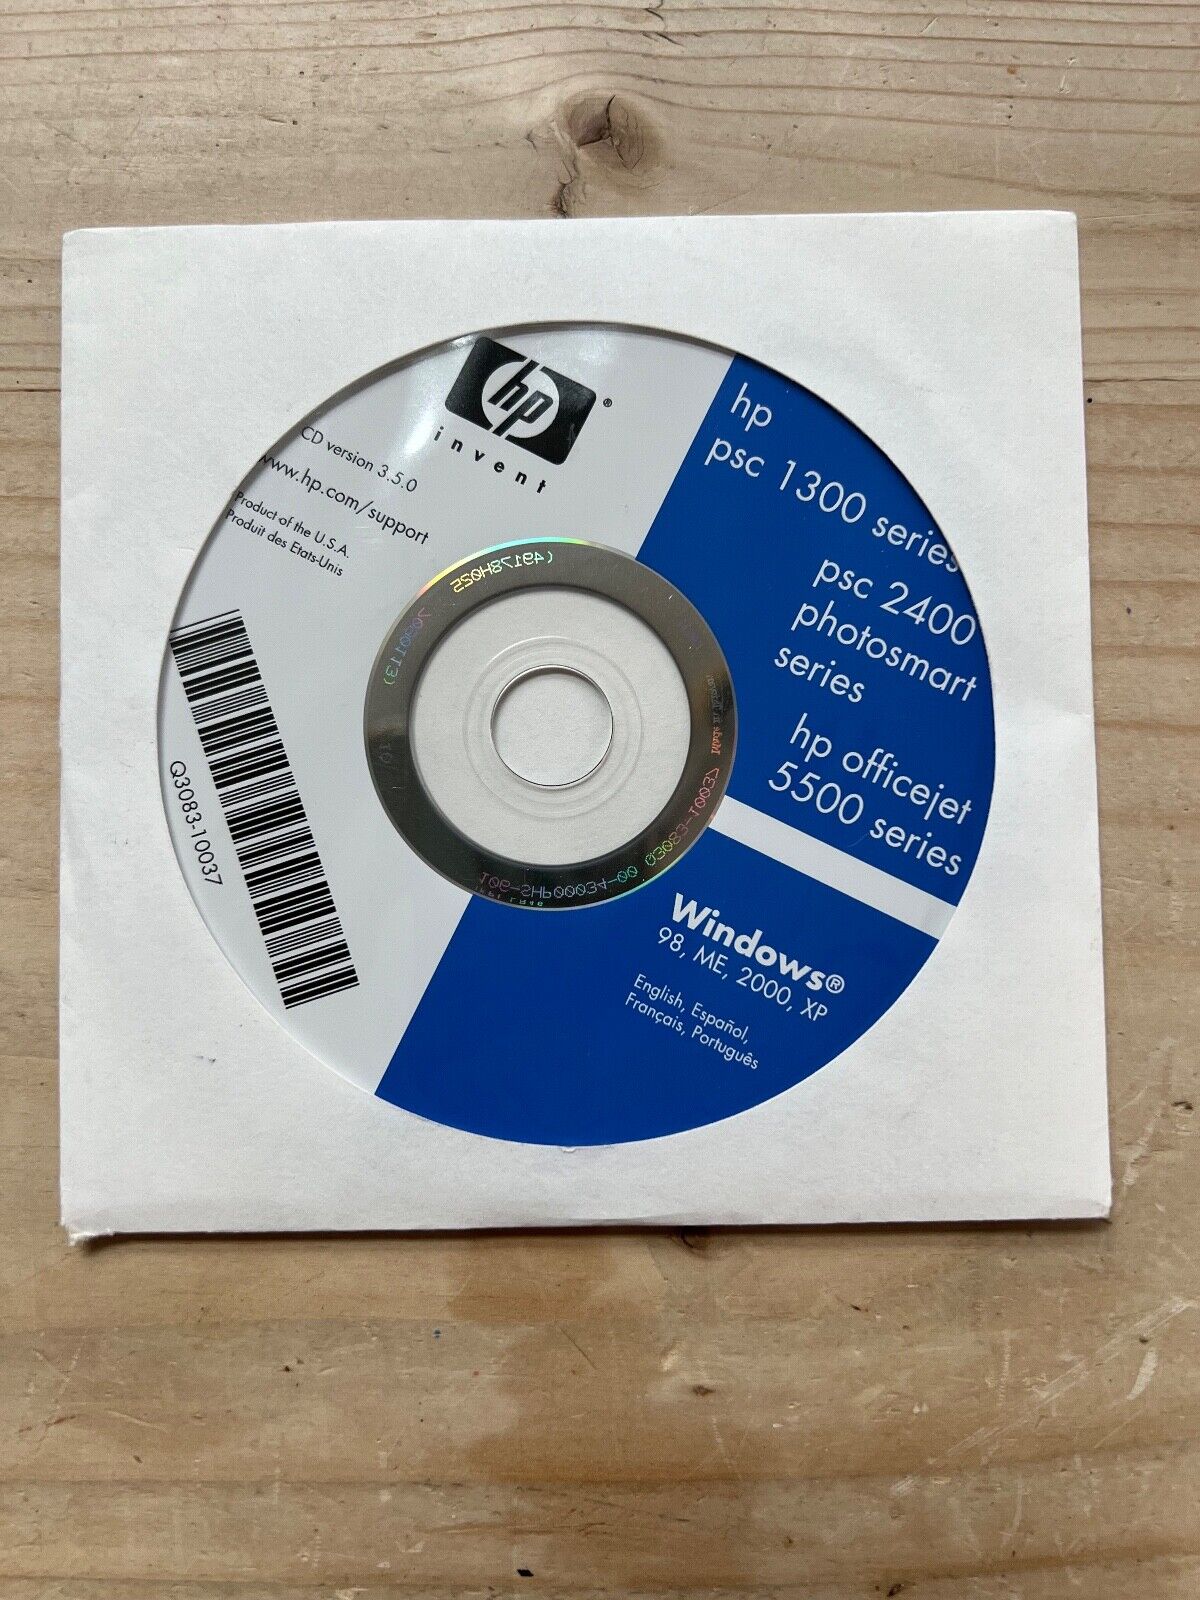 HP OfficeJet PSC 1300 series, psc 2400 photosmart, officejet  5500 series CD